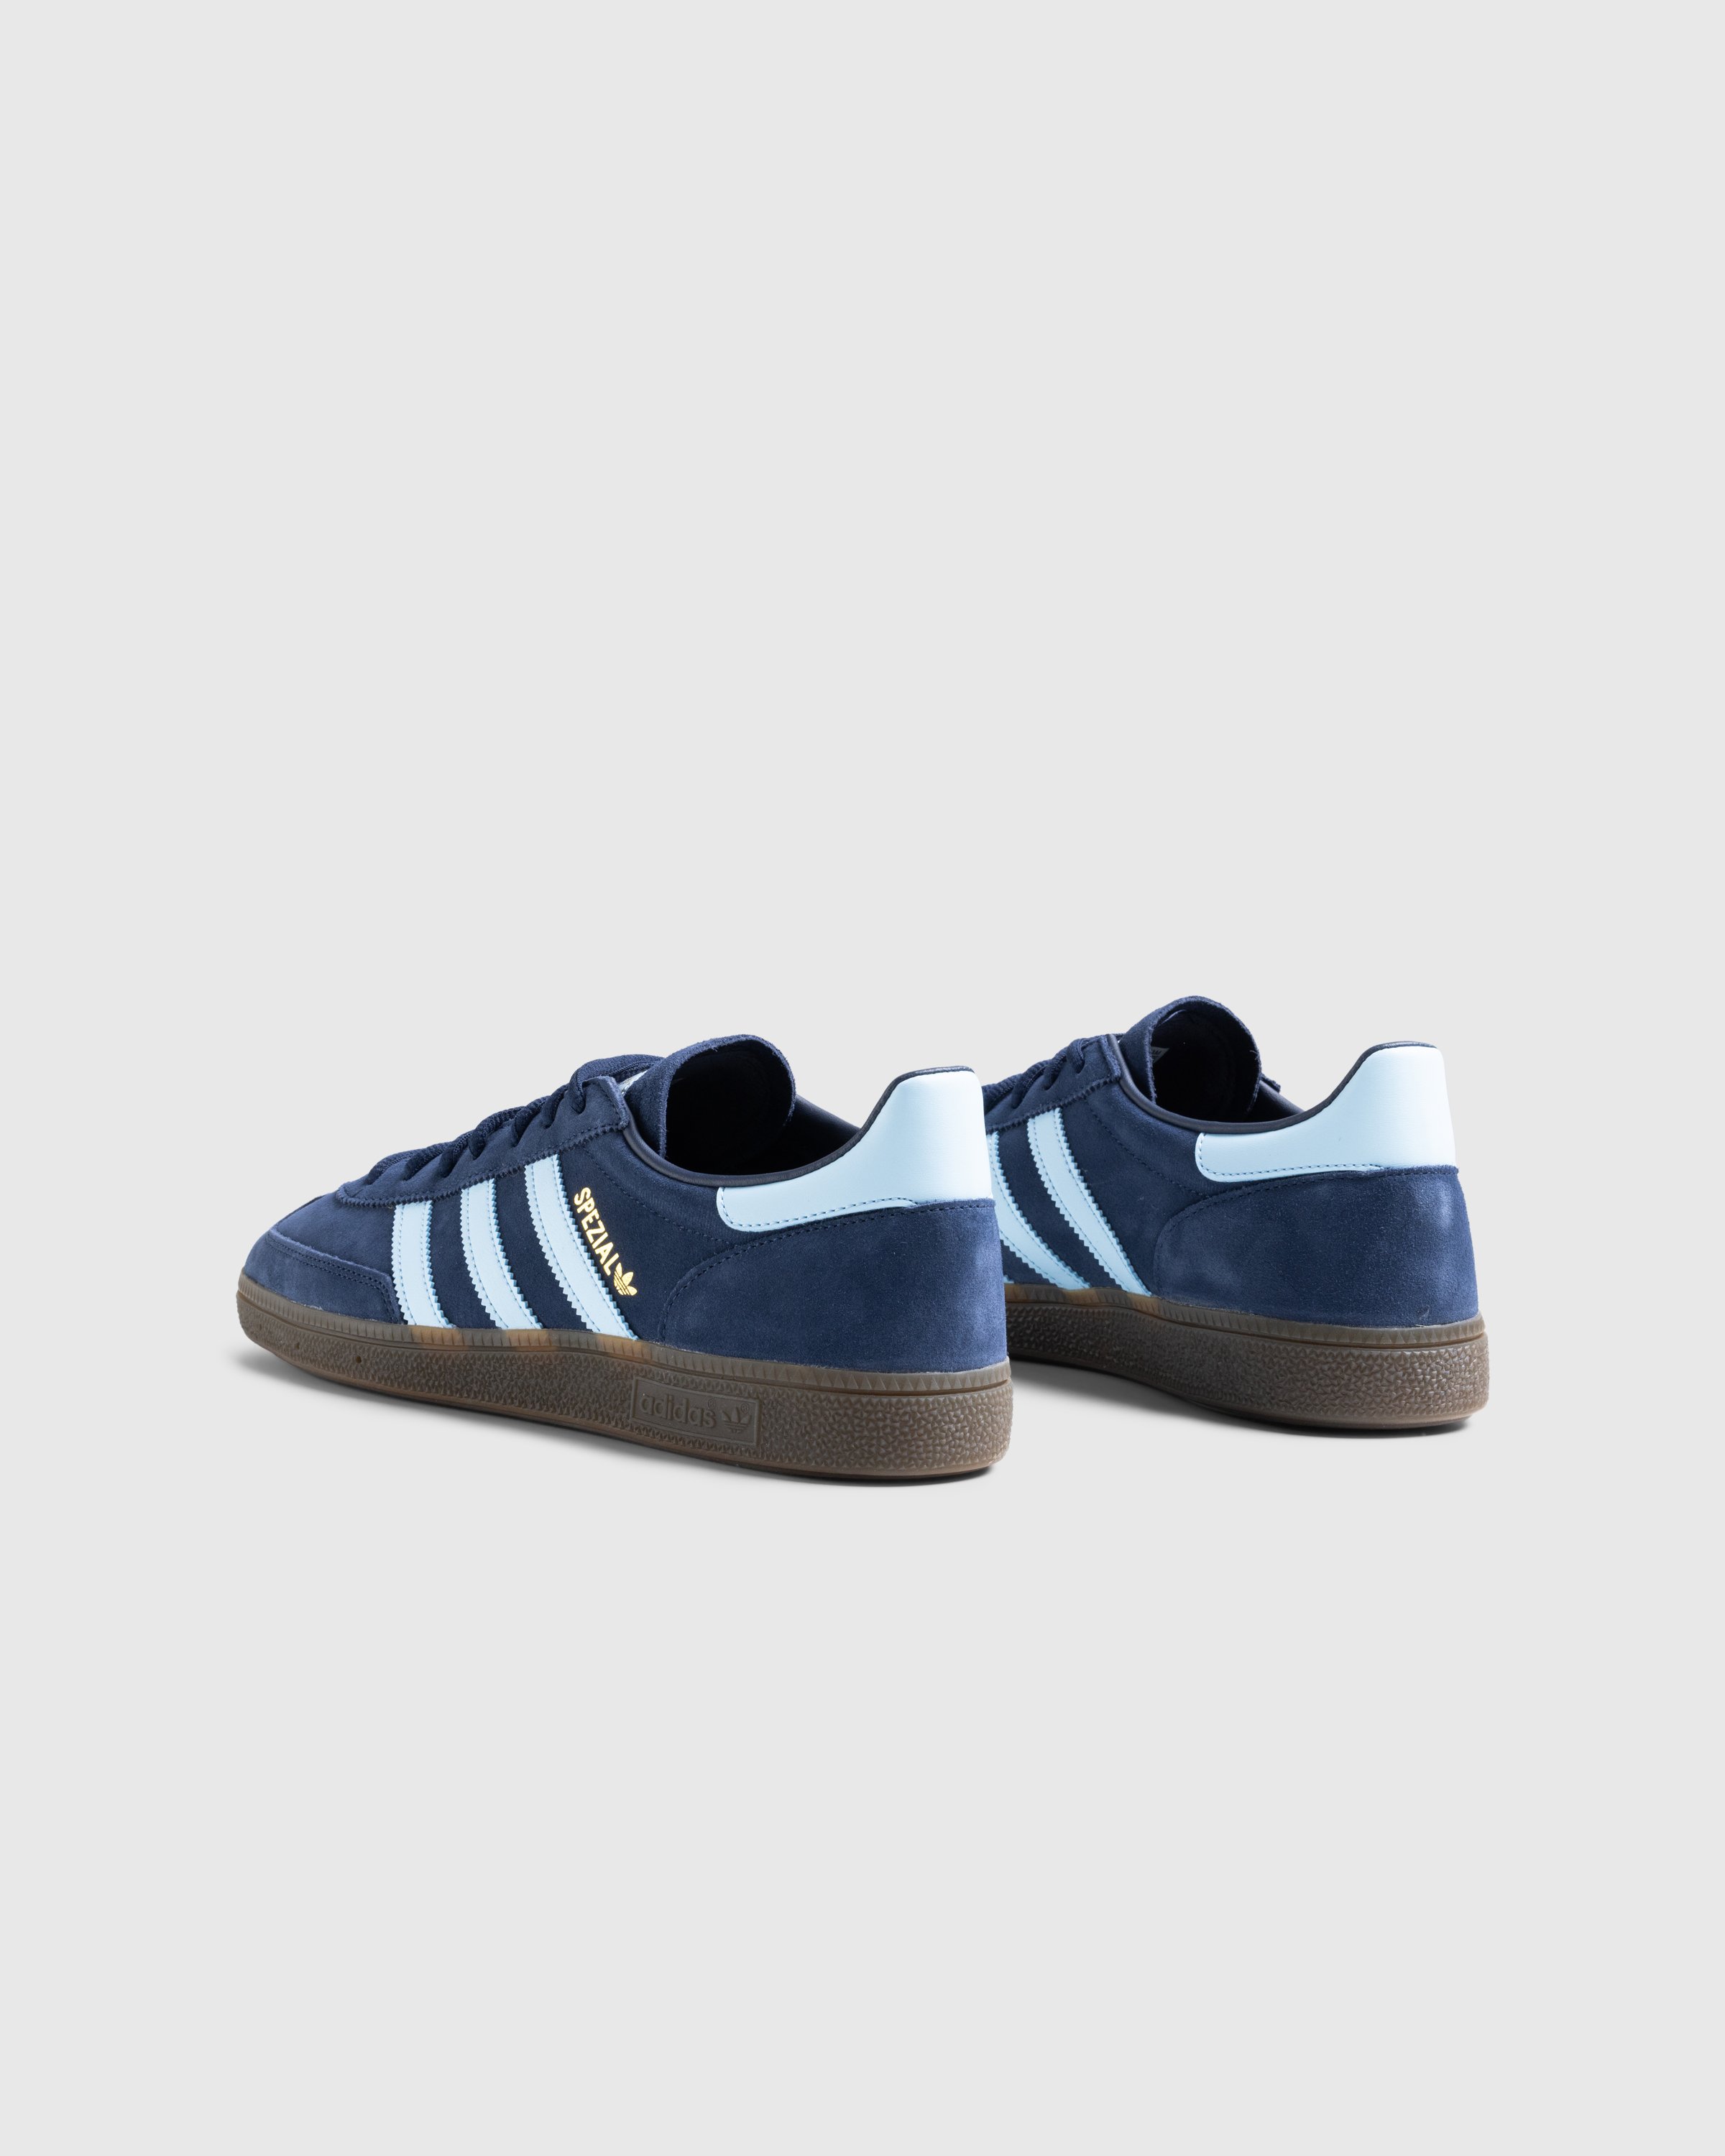 Adidas - Handball Spezial    Conavy/Clesky/Gum5 - Footwear - Blue - Image 4